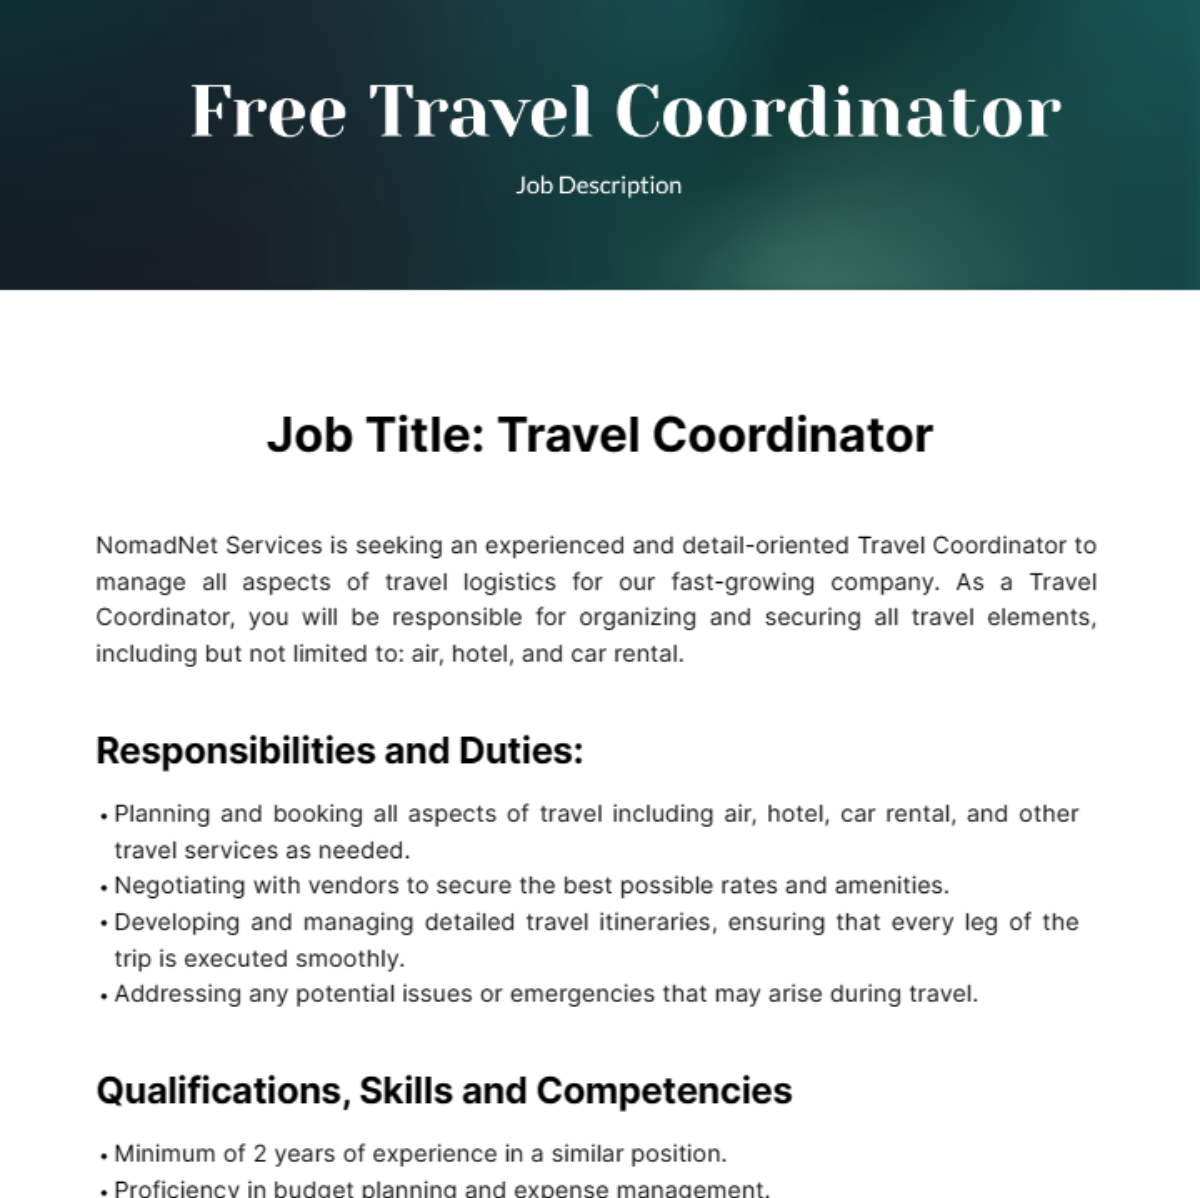 Free Travel Coordinator Job Description Template